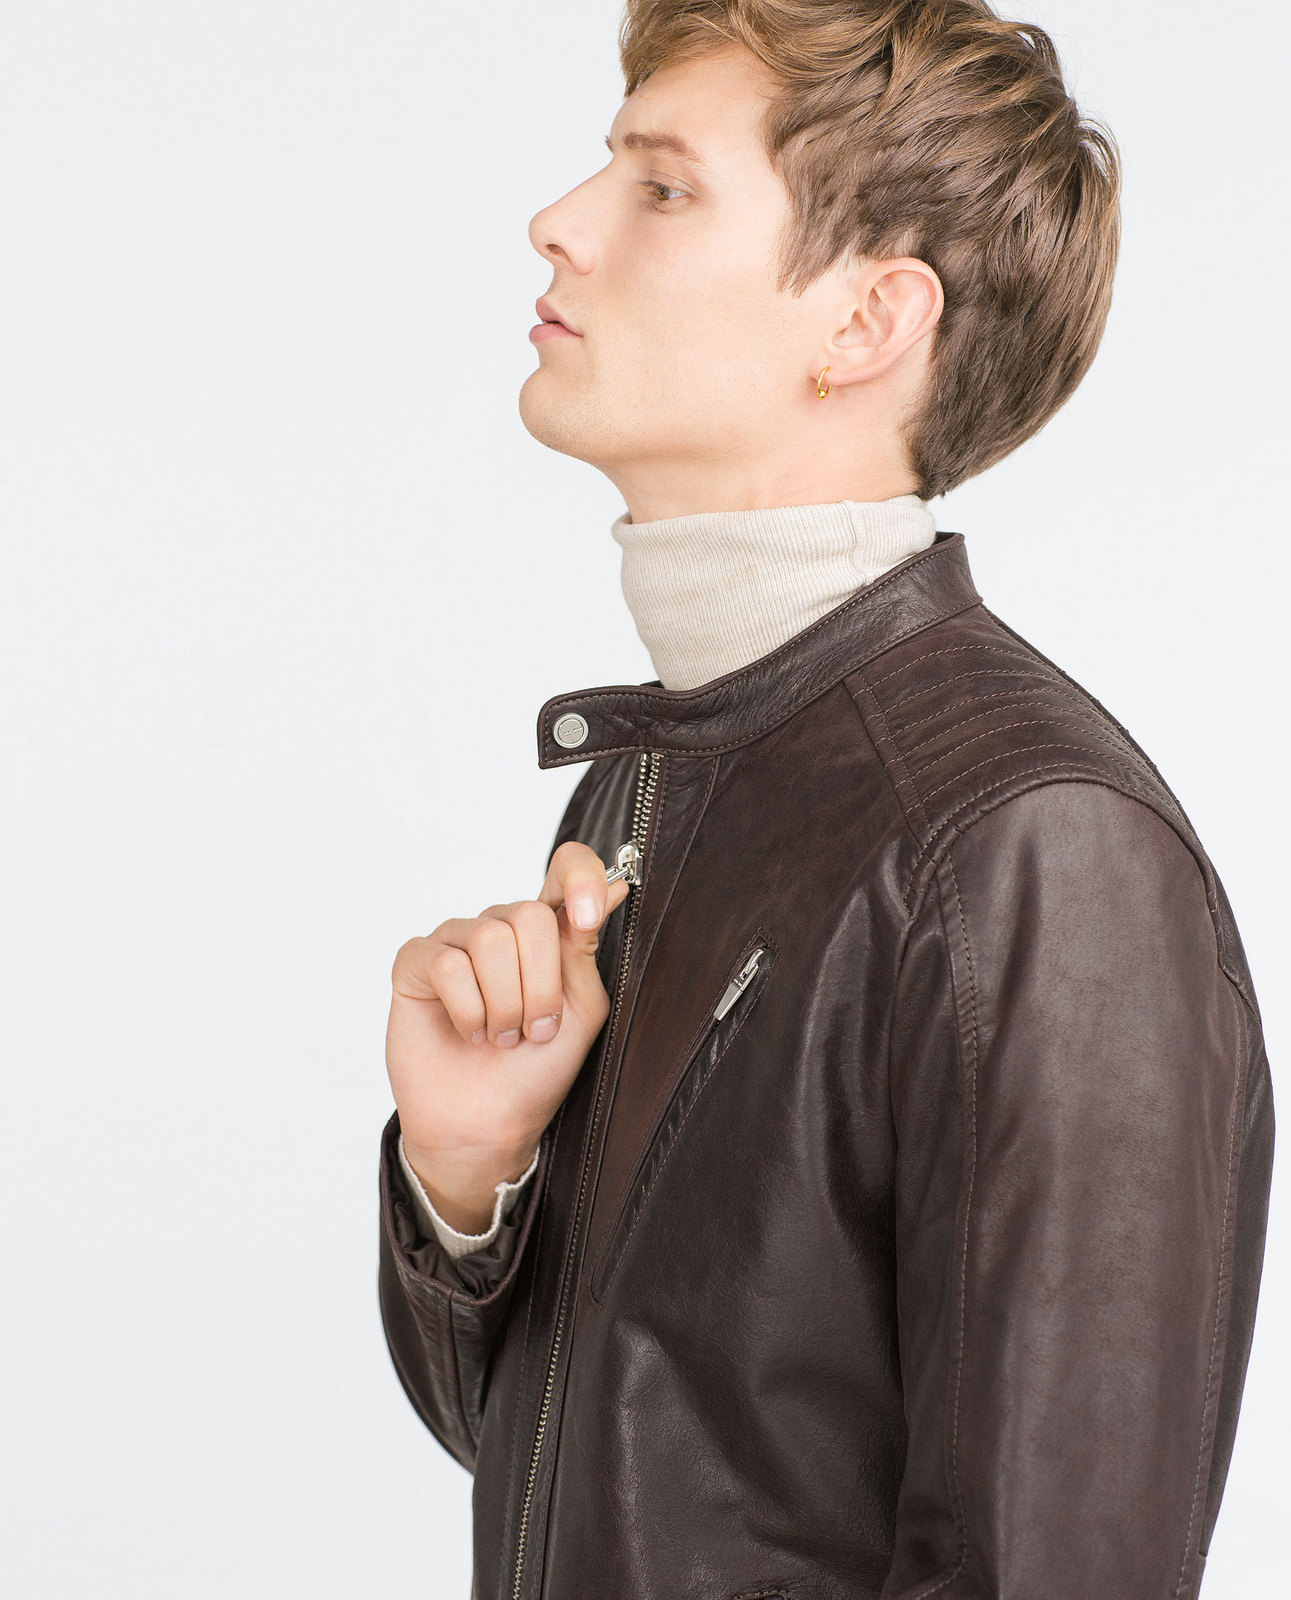 Zara barna férfi bőrkabát 2015.10.15 fotója